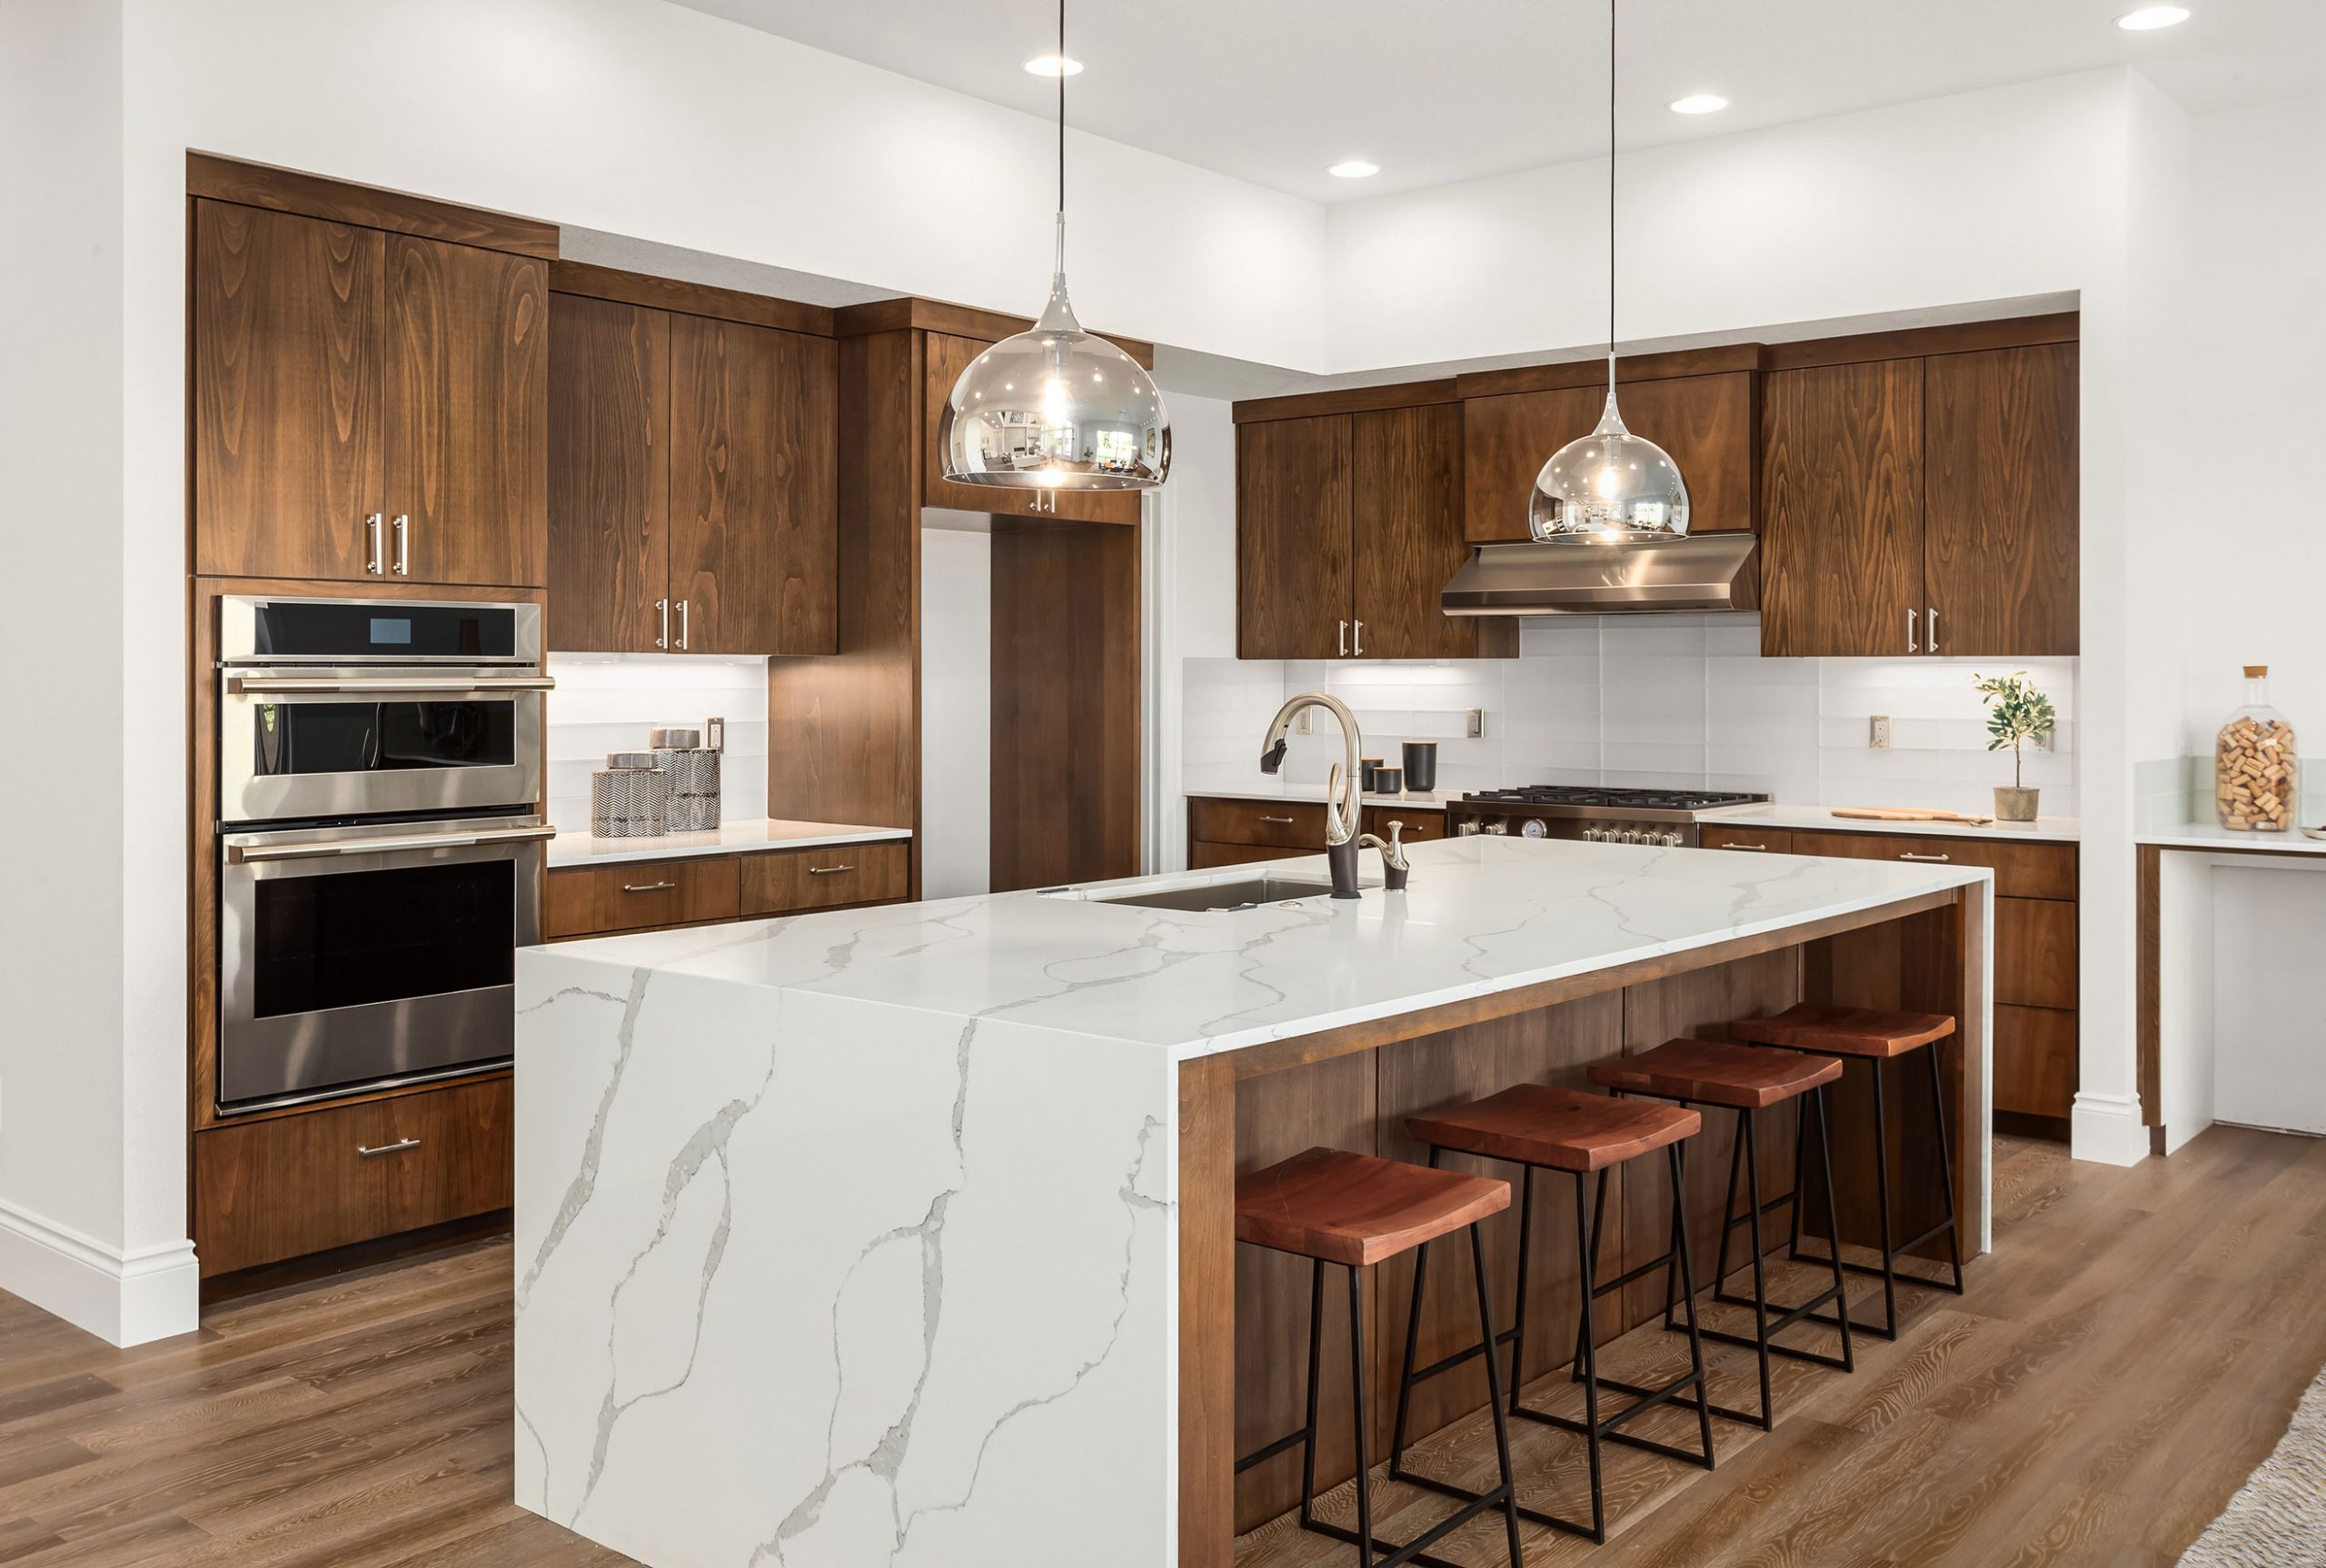 Elegant kitchen with granite countertops and dark wooden cabinets